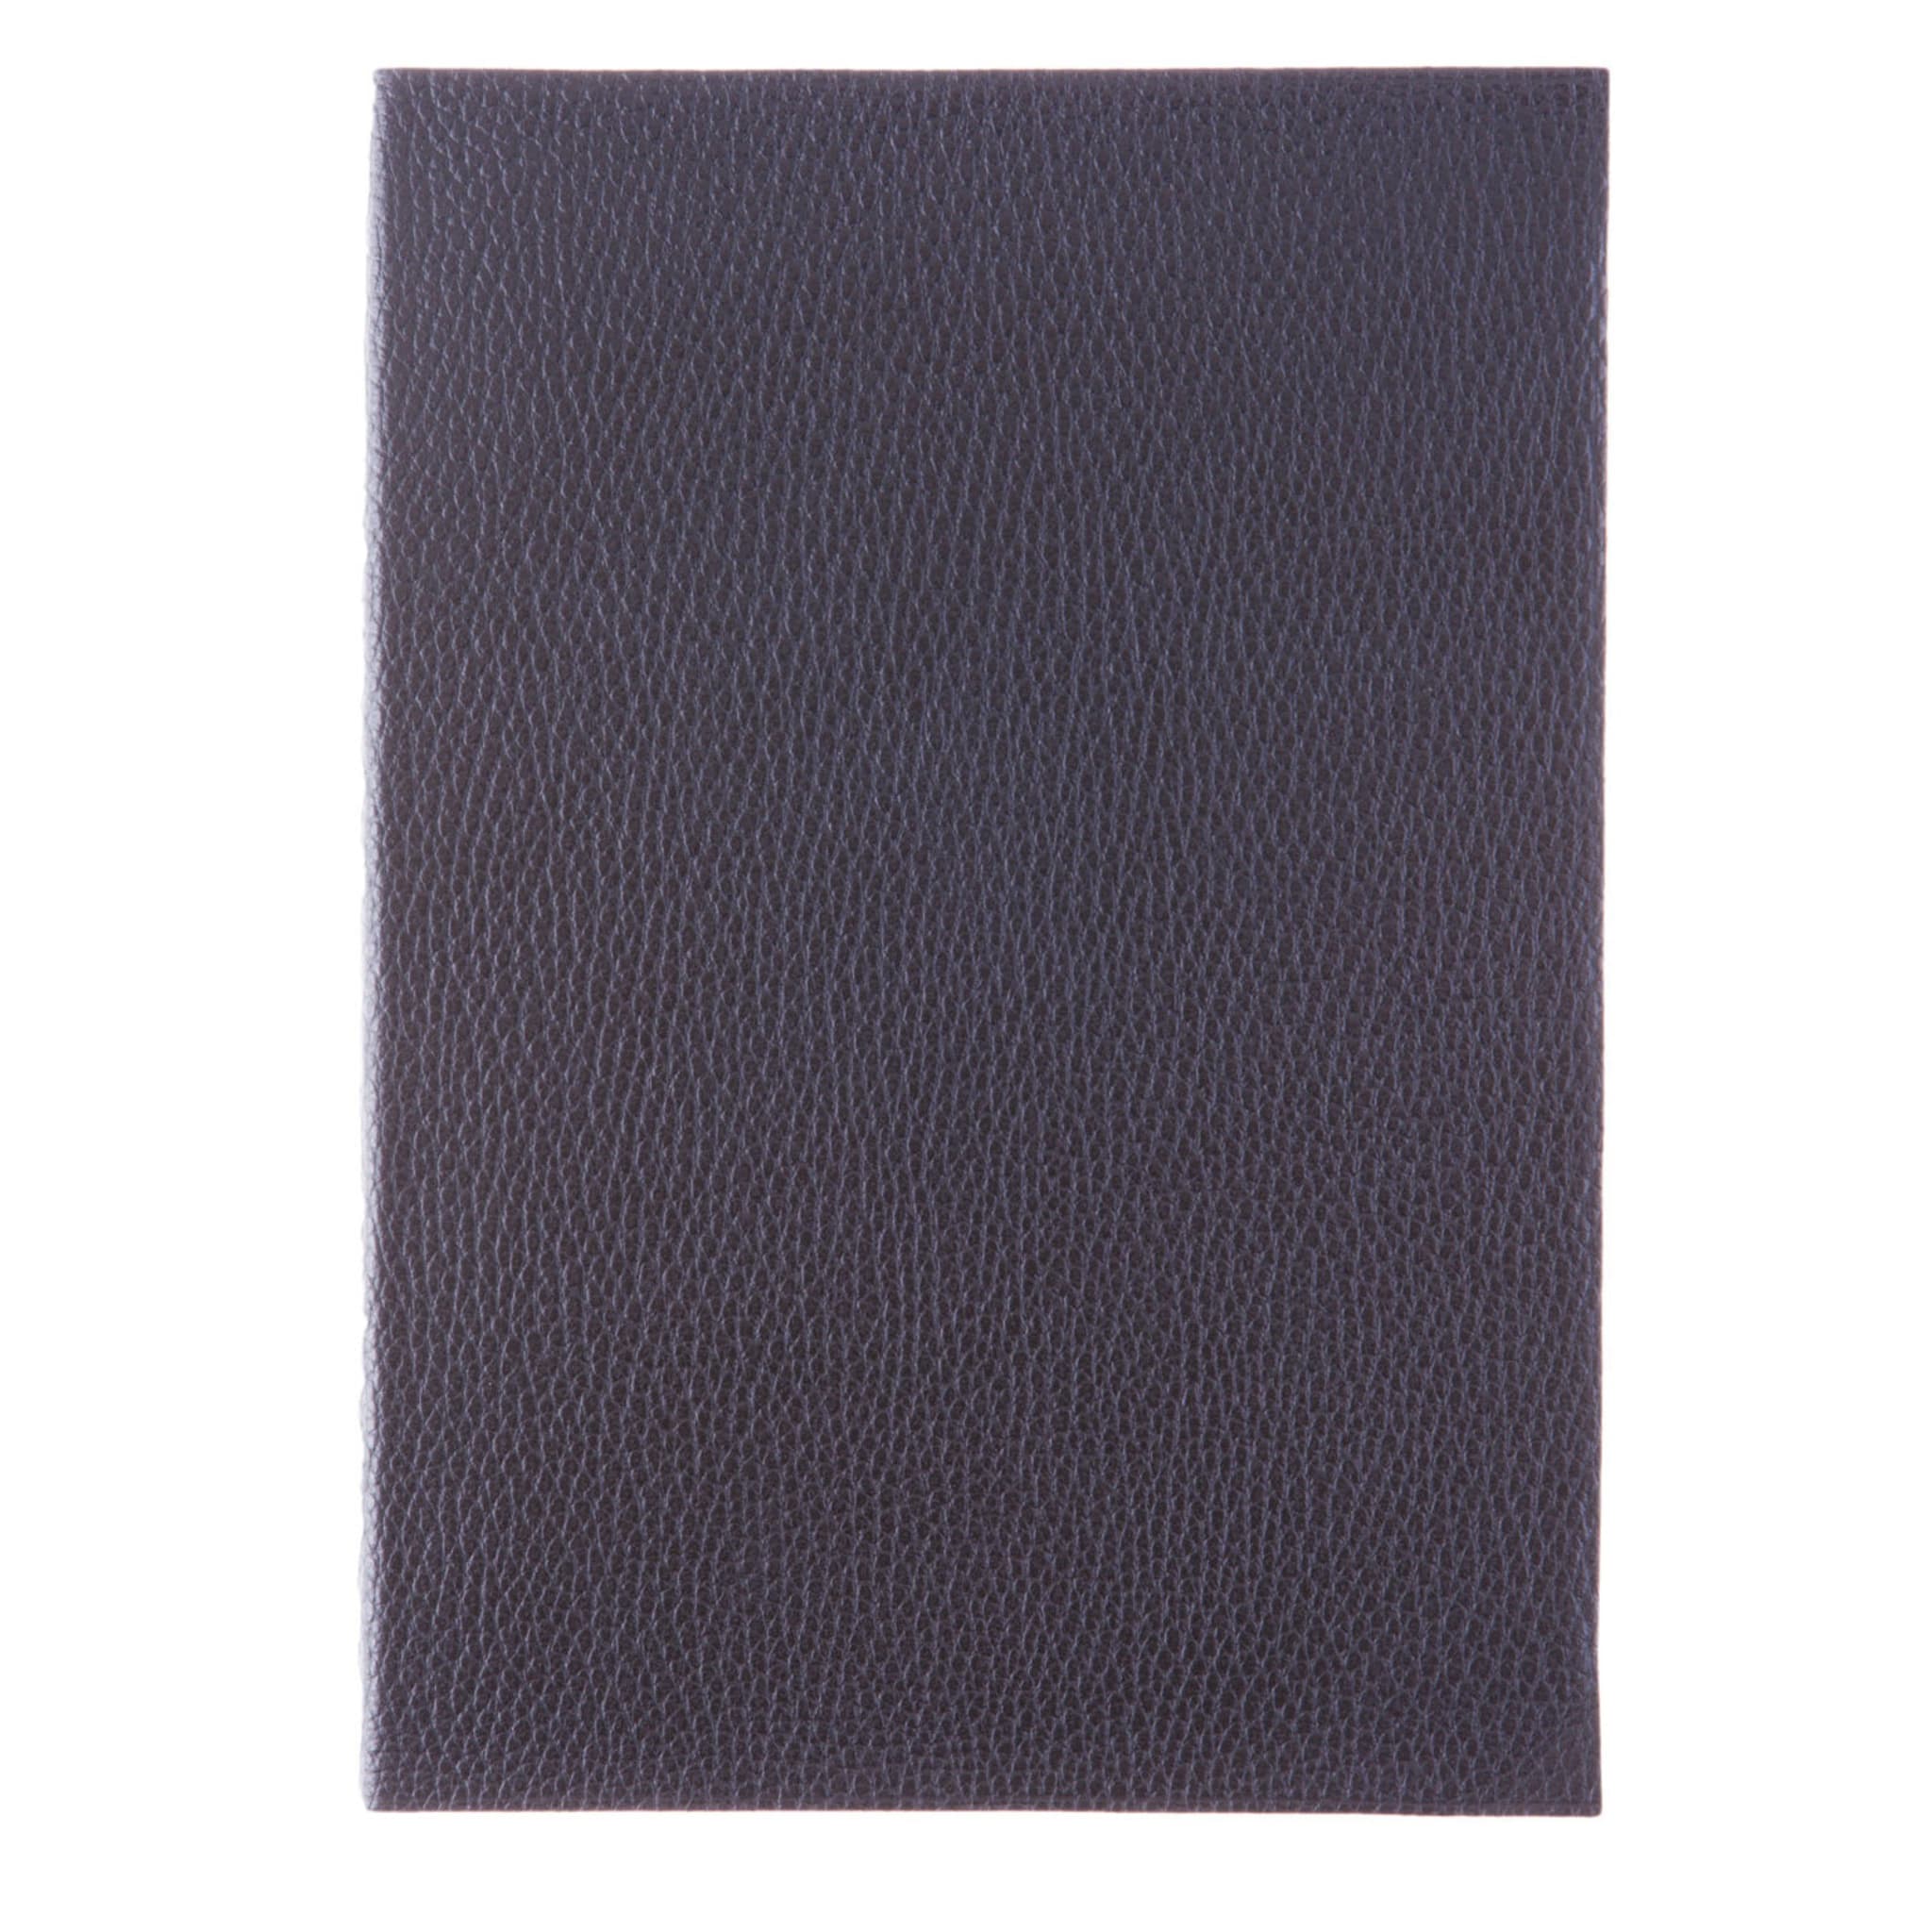 Nero Elegante Leather Notebook - Alternative view 2